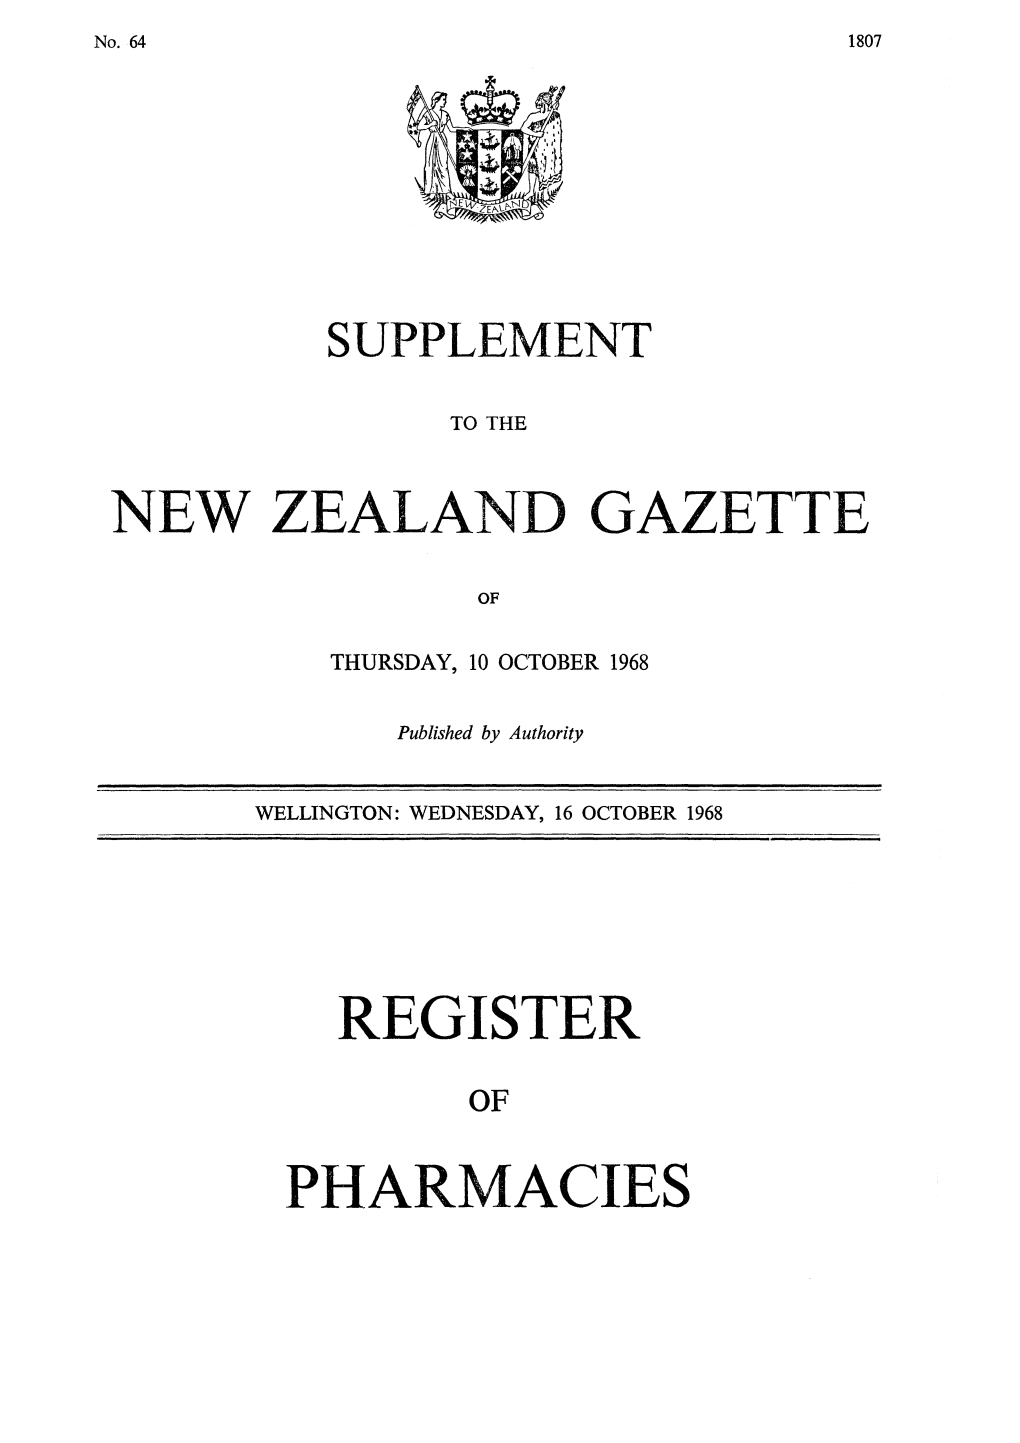 New Zealand Gazette Register Pharmacies